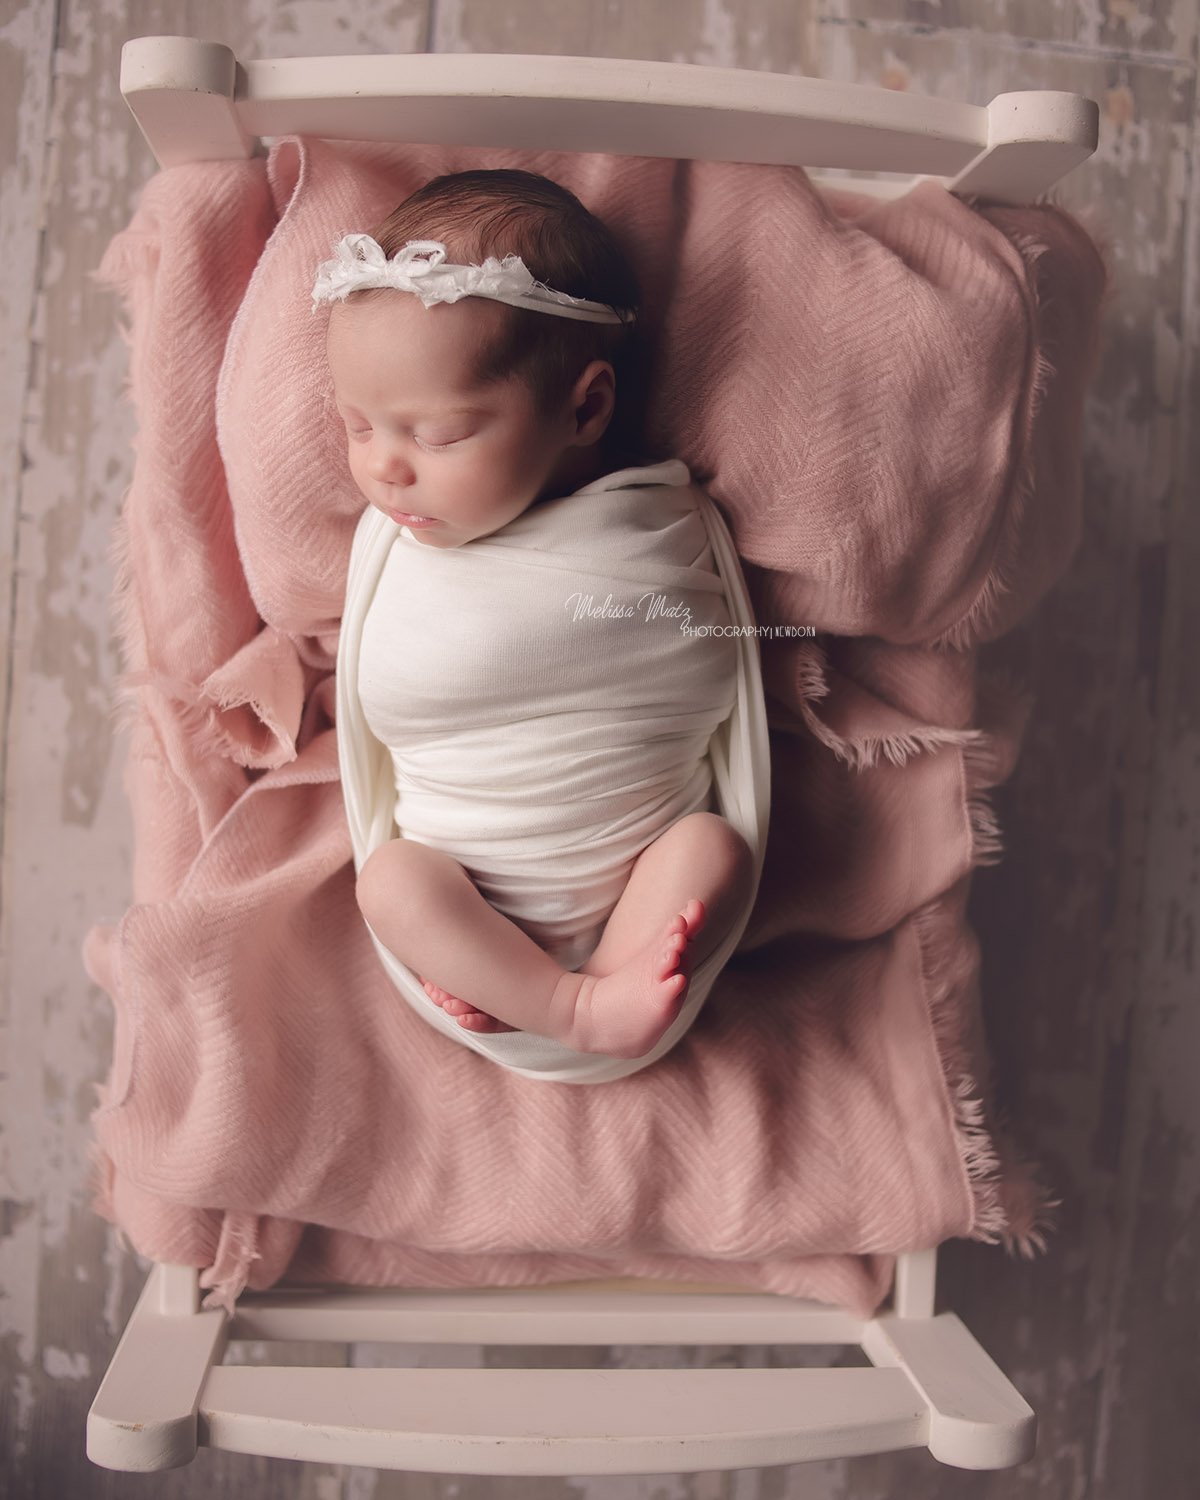 oakland-county-newborn-photographer-newborn-baby-bed